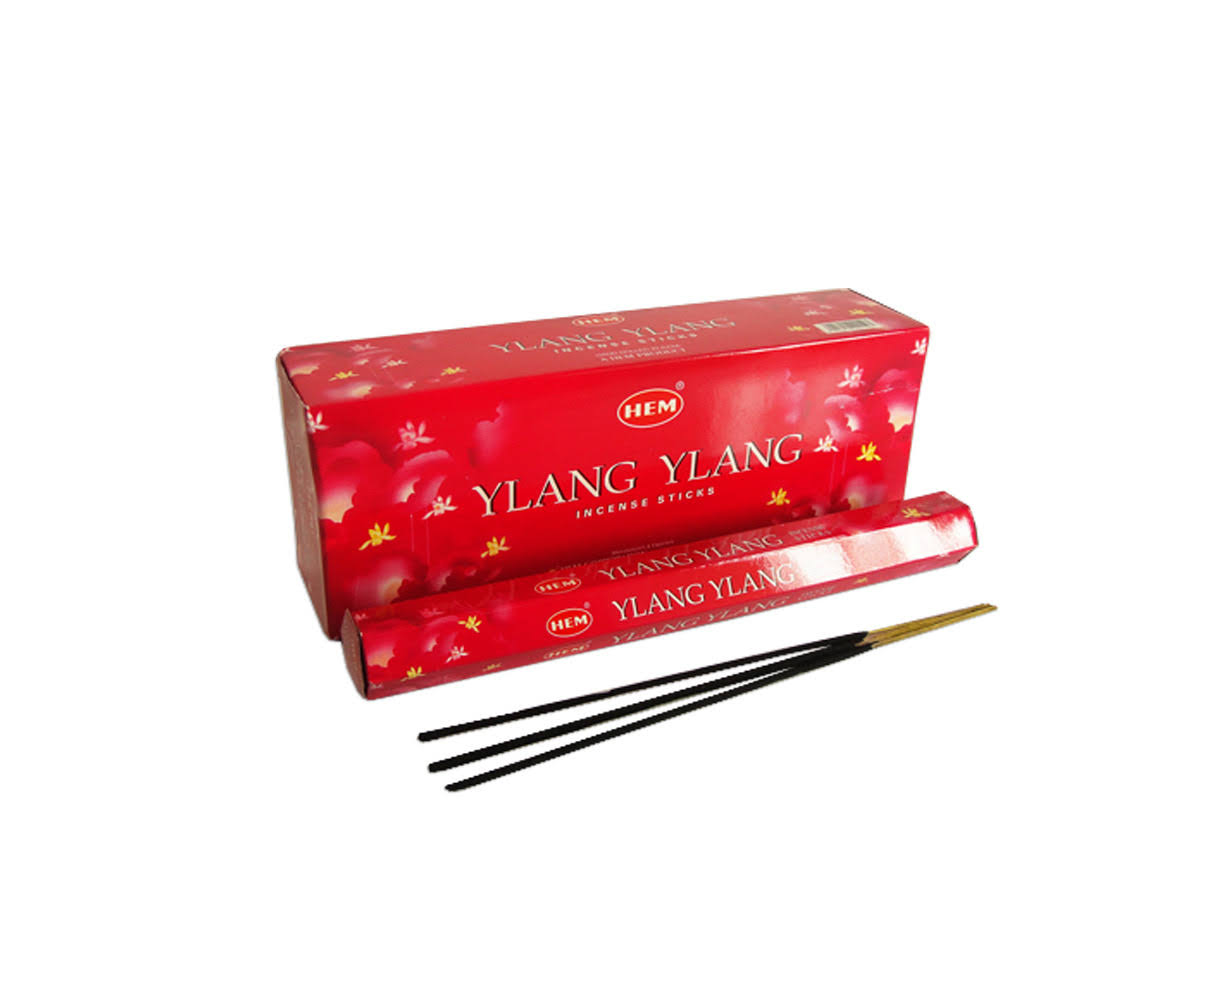 Hem Ylang Ylang Incense Sticks